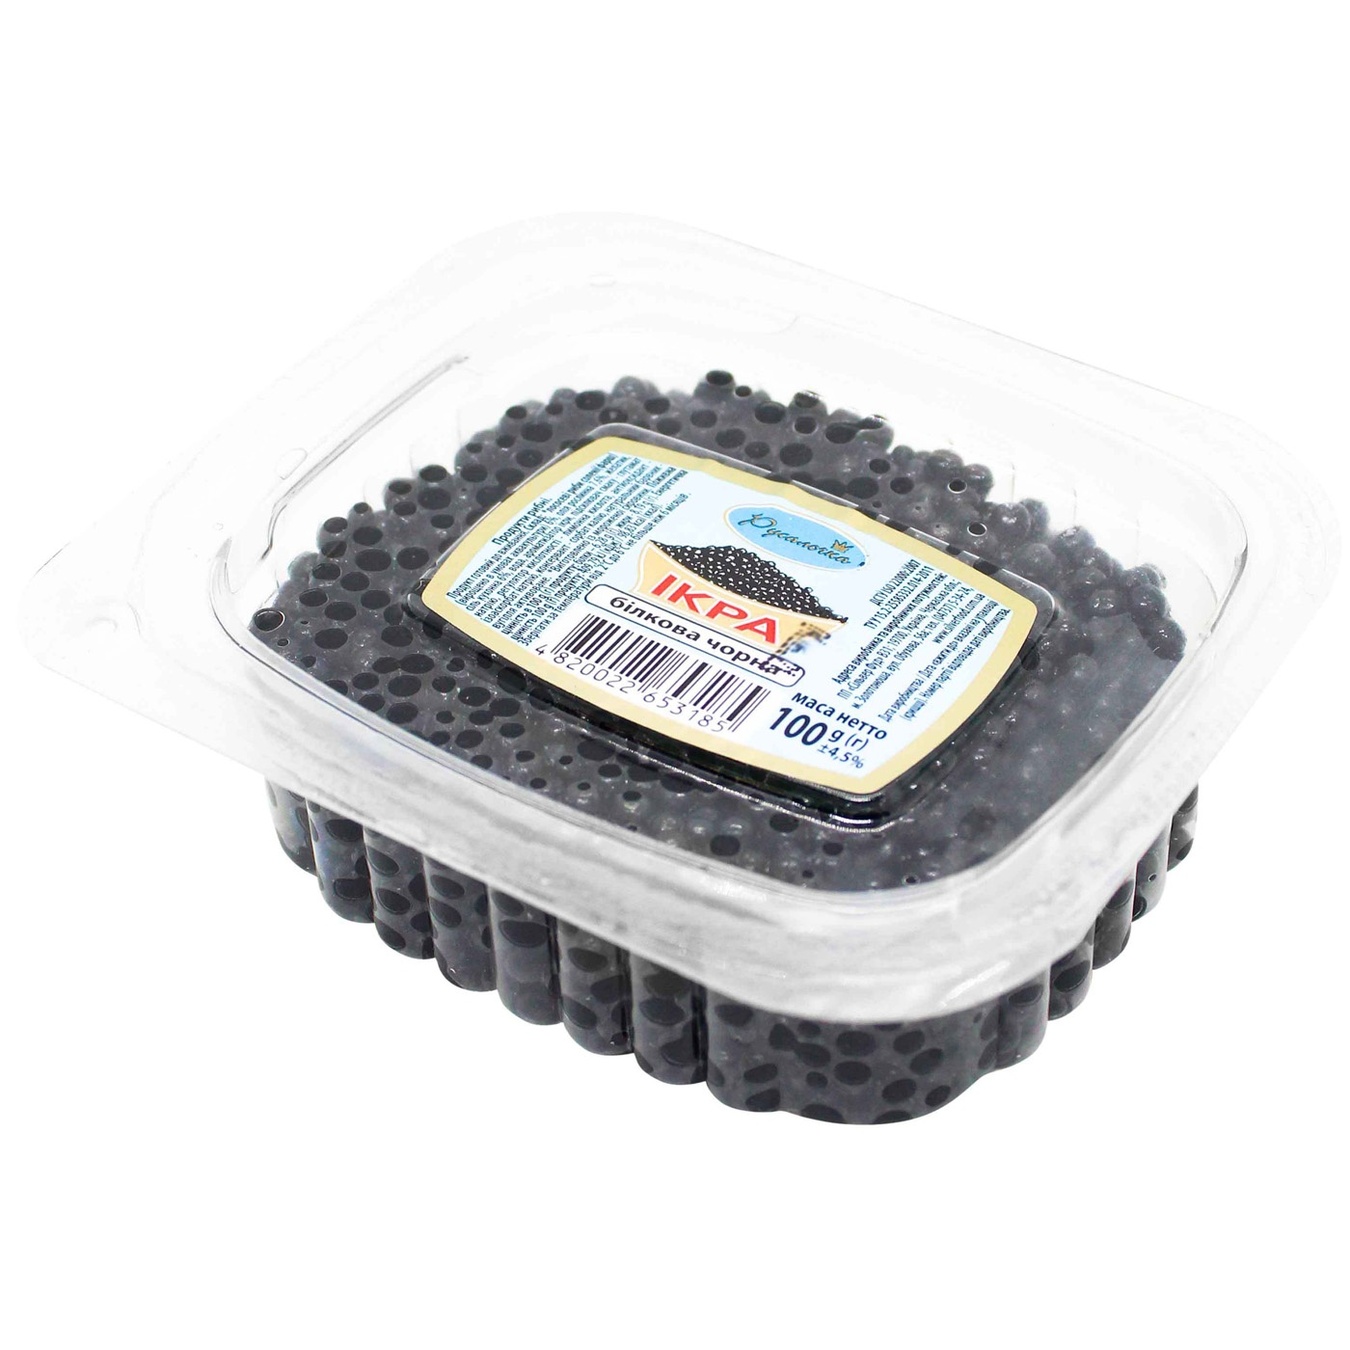 White mermaid caviar black 100g